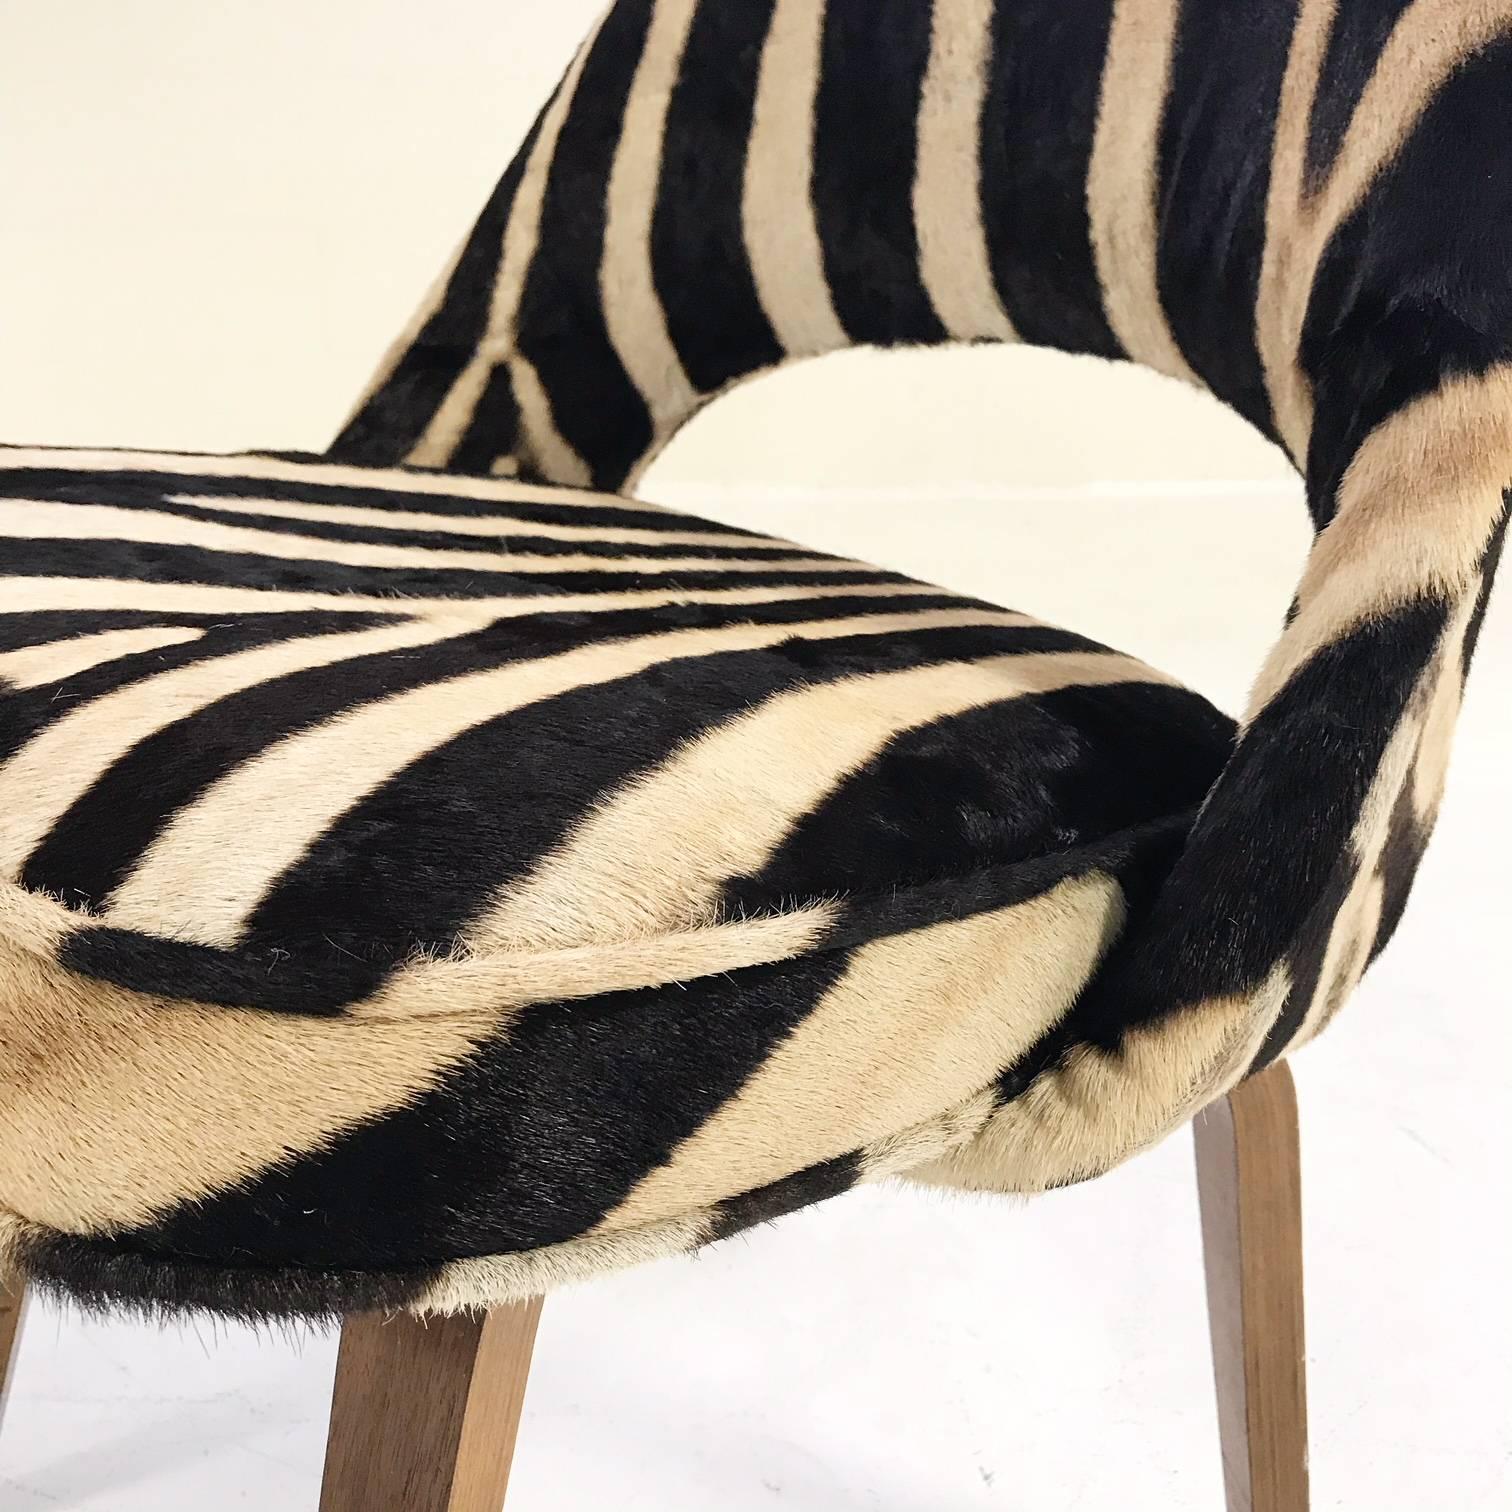 20th Century Vintage Eero Saarinen Executive Chairs for Knoll with Walnut Legs in Zebra Hide